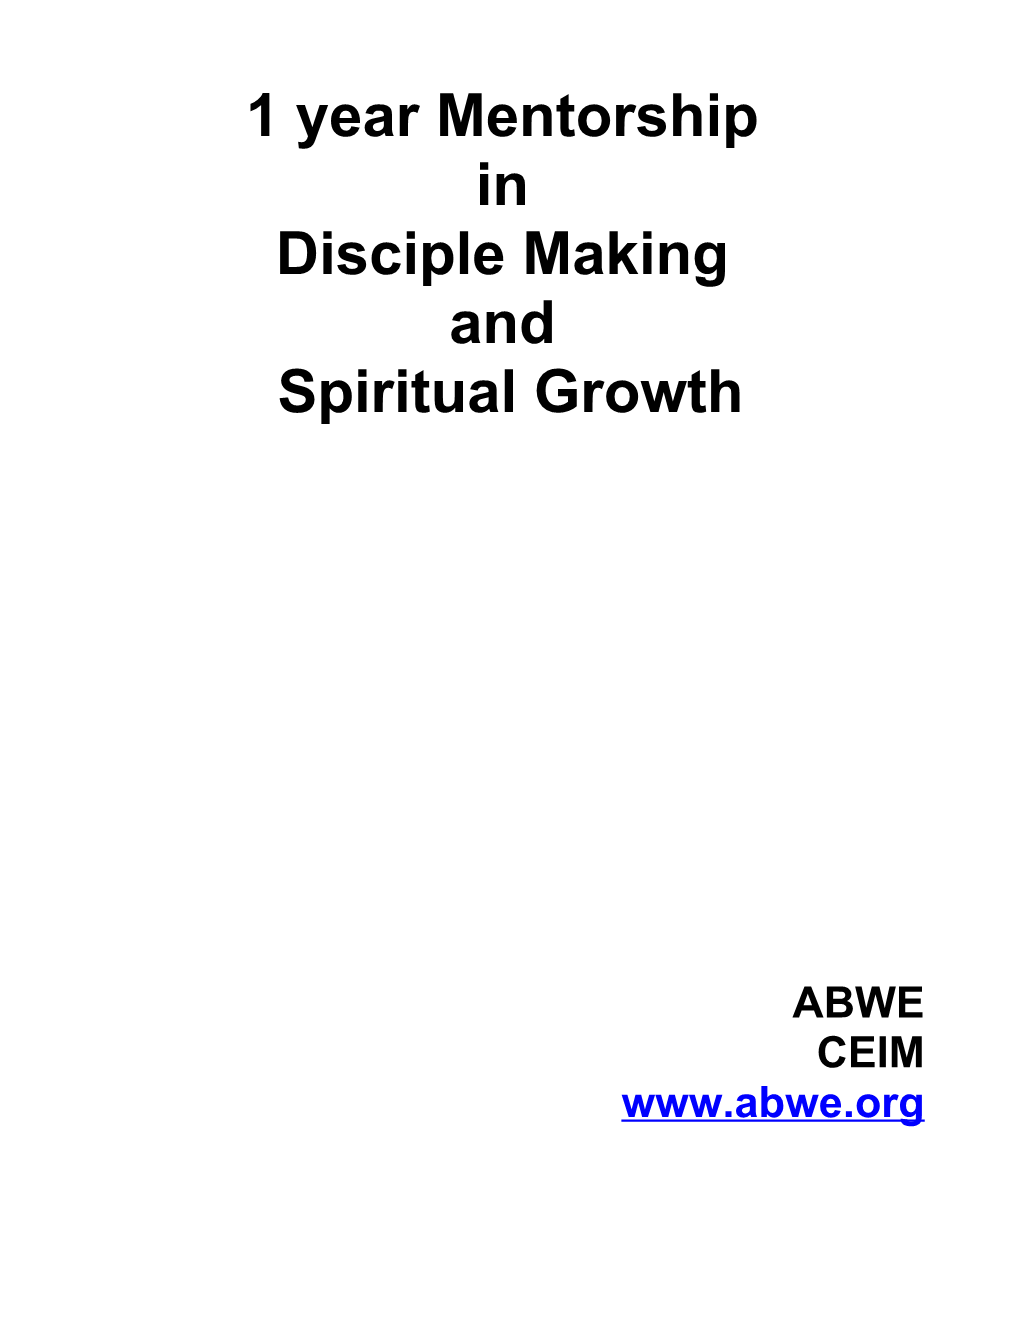 Mentorship in Disciple-Making